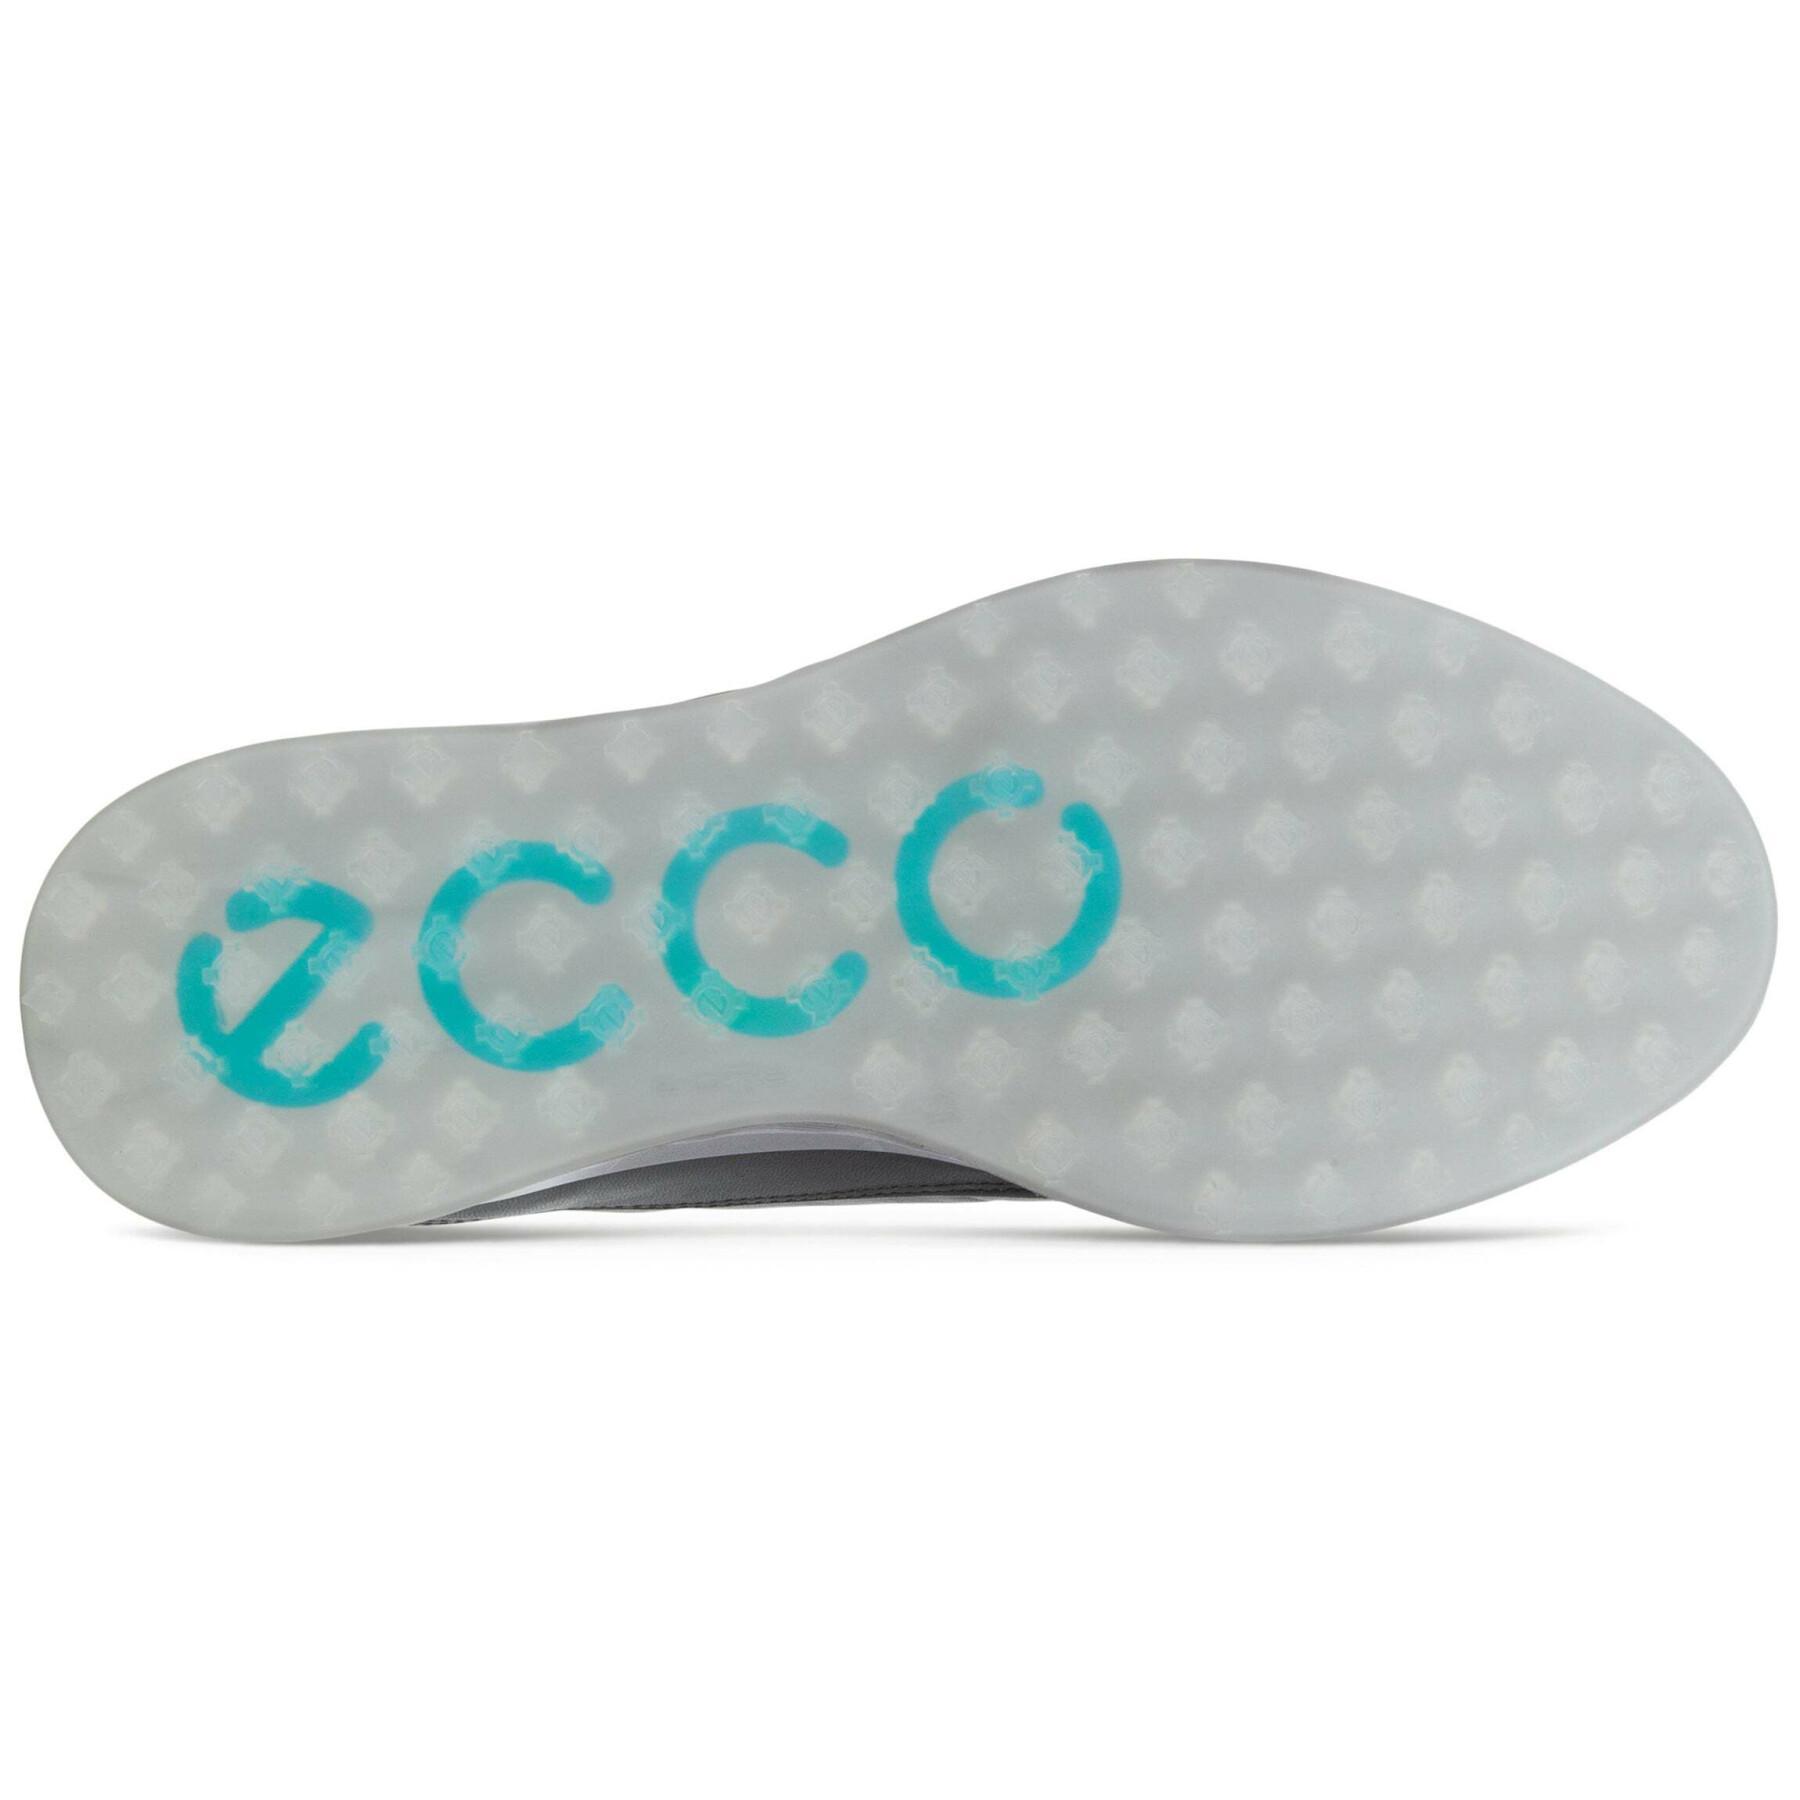 Zapatos de golf Ecco M S-Three S-Three Boa